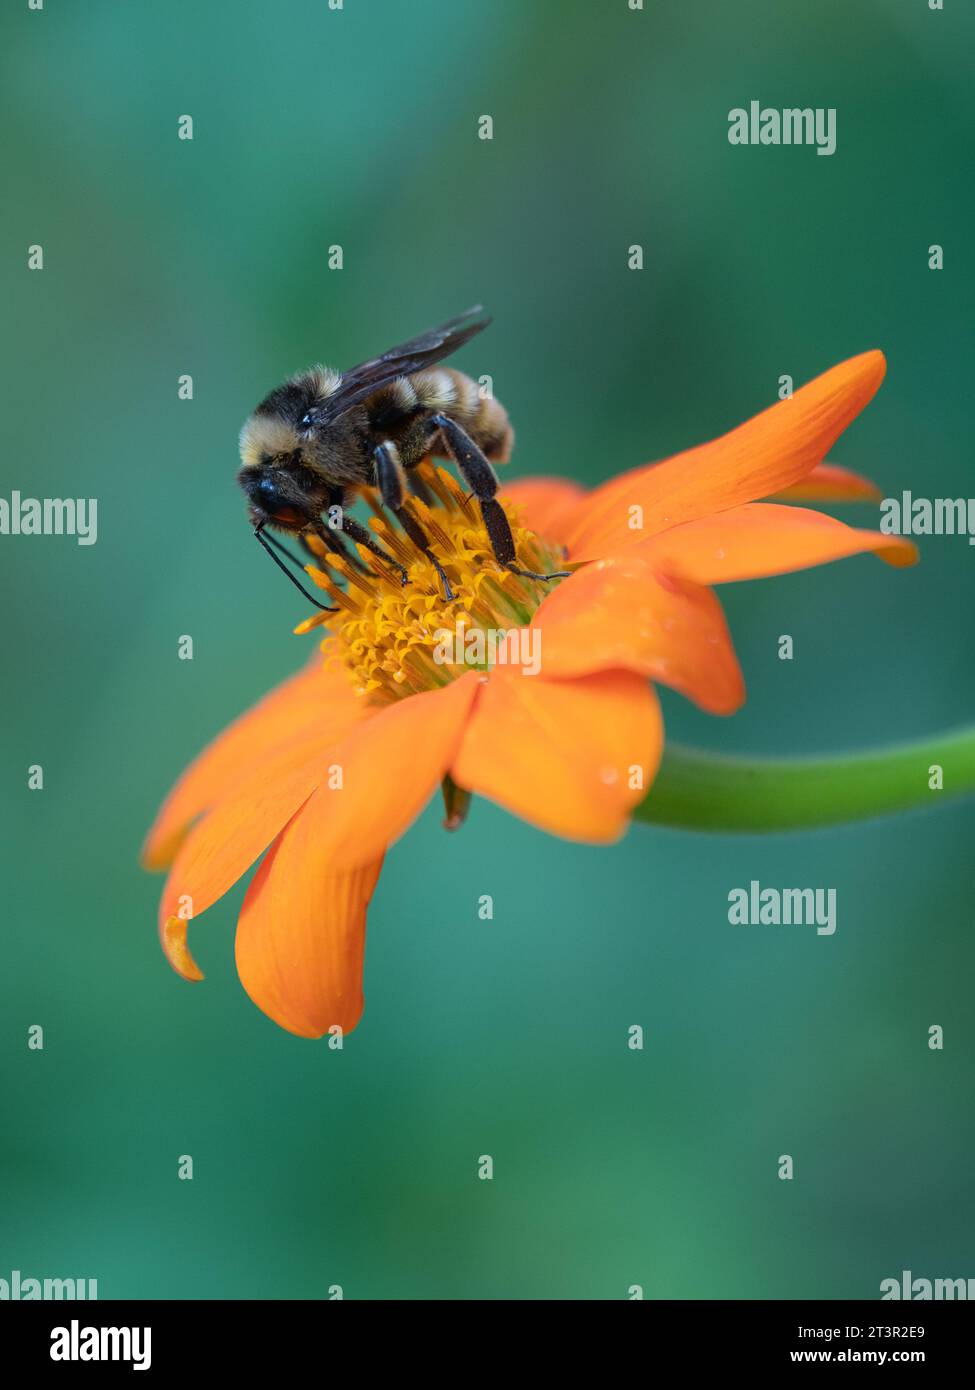 Bombus pensylvanicus, the American bumble bee, on the flower of Tithonia rotundifolia, Mexican sunflower. Stock Photo